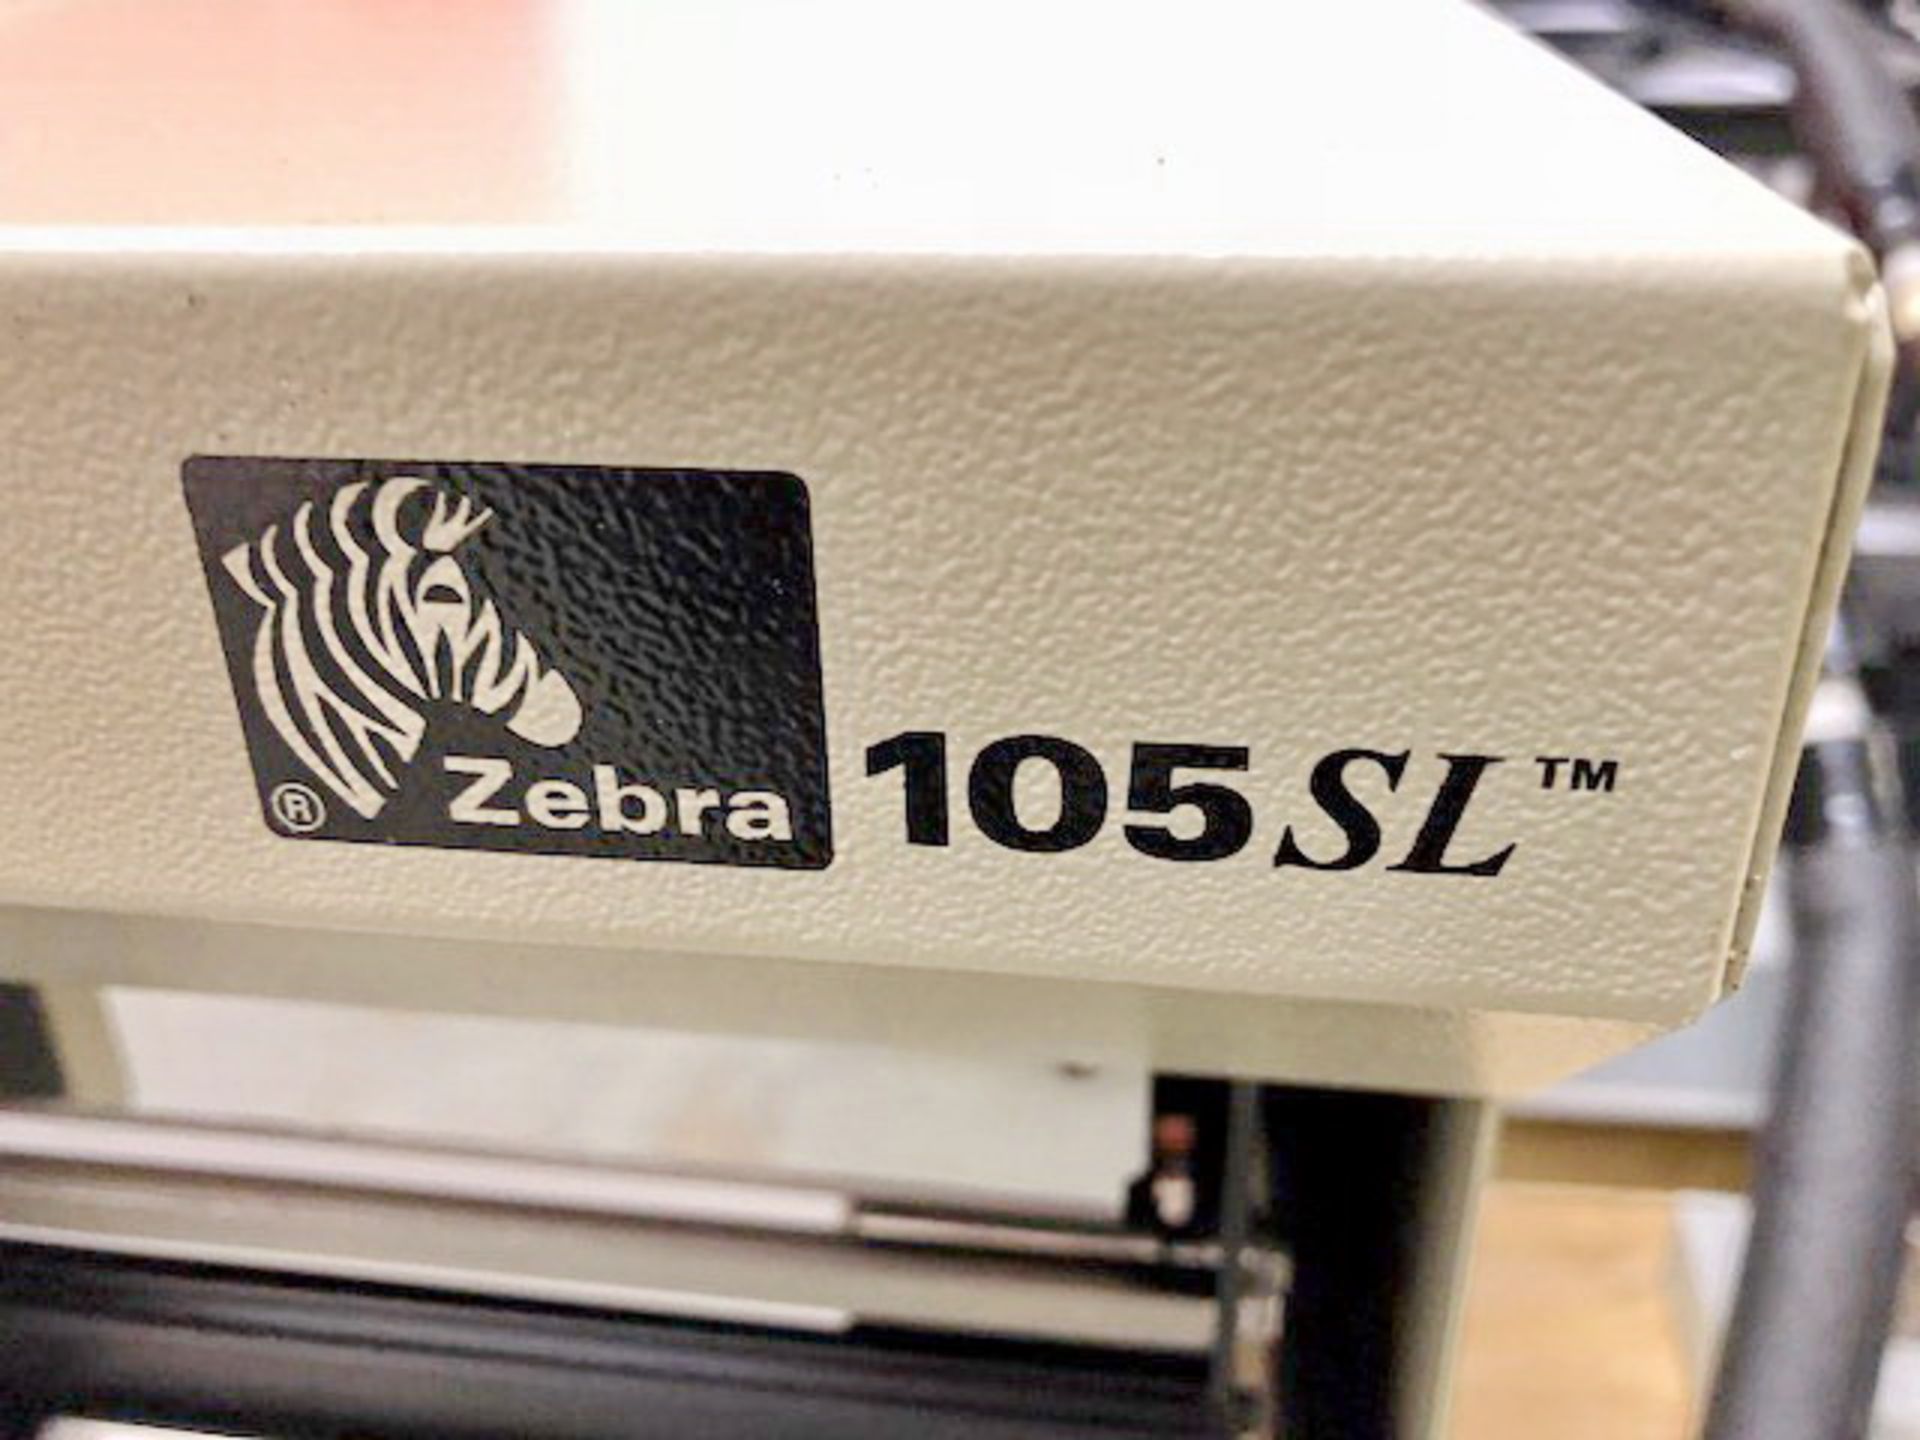 Zebra Industrial Printer - Image 2 of 3